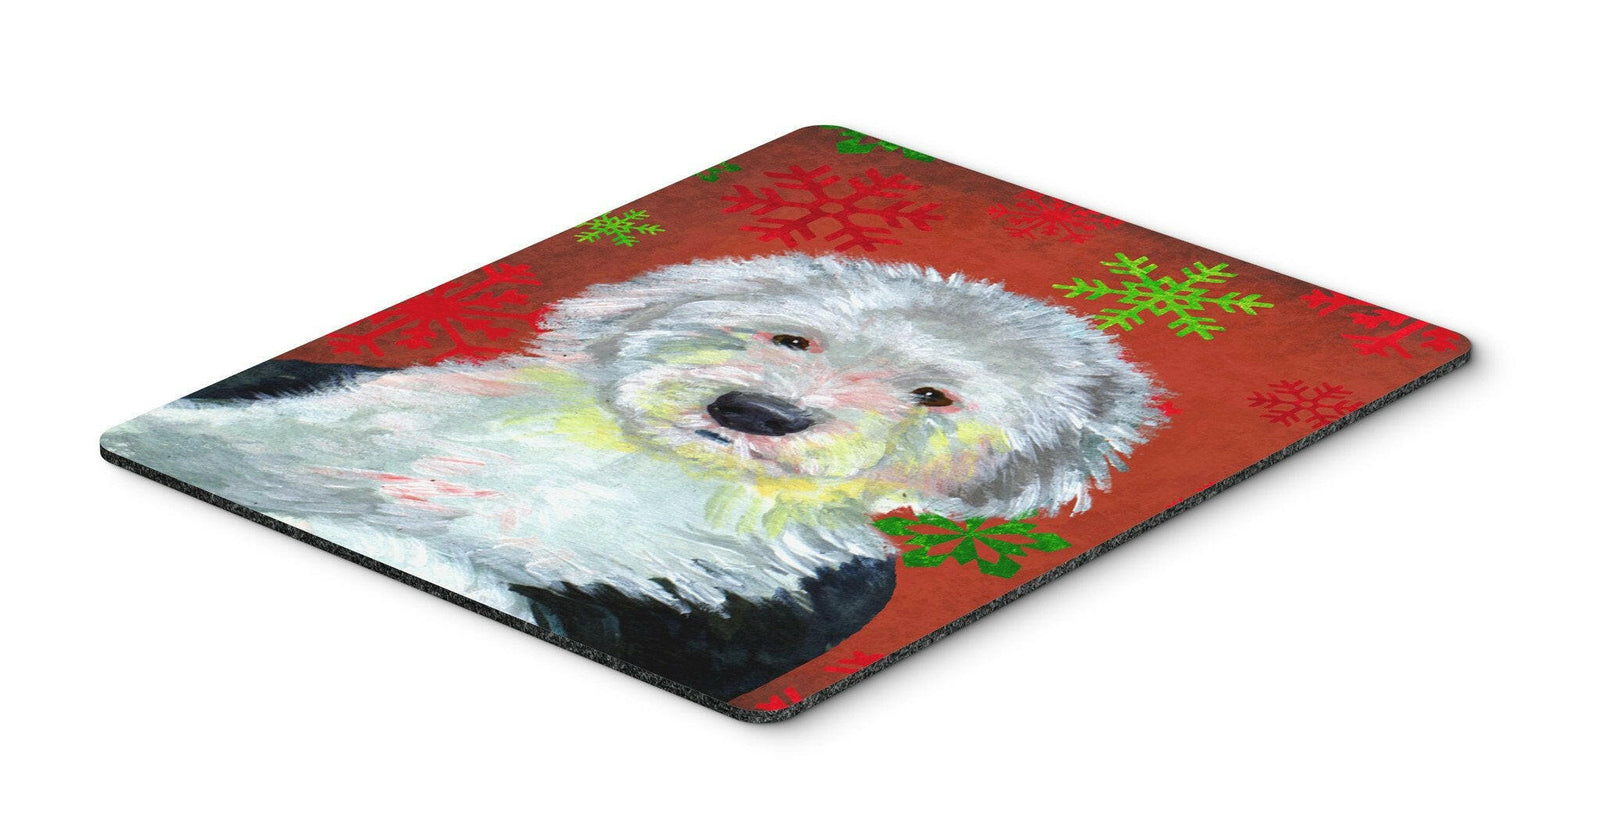 Old English Sheepdog  Snowflakes Christmas Mouse Pad, Hot Pad or Trivet by Caroline's Treasures